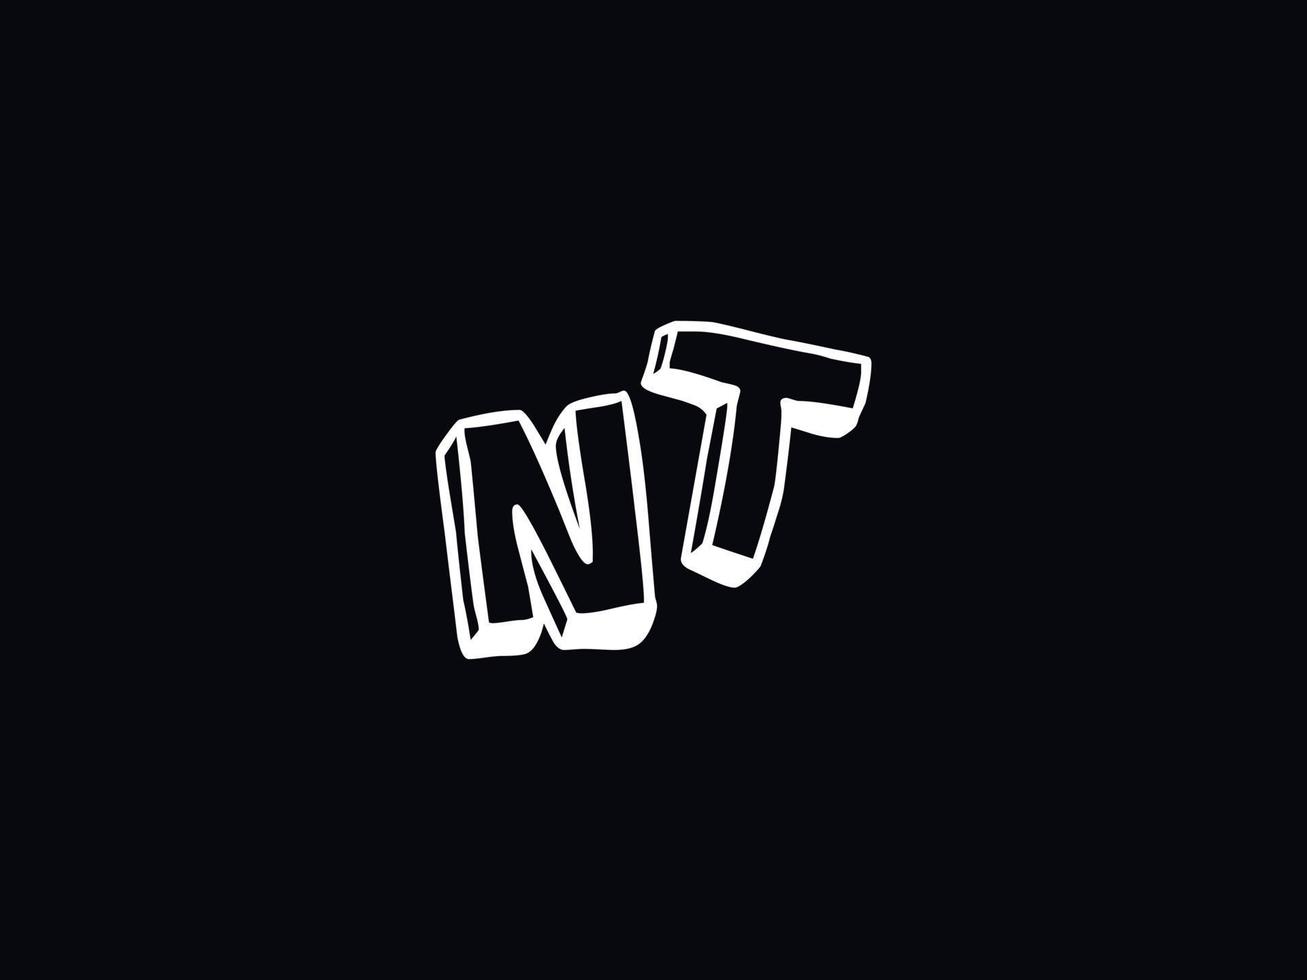 Abstract Nt Logo Image, Modern NT Minimalist Letter Logo vector